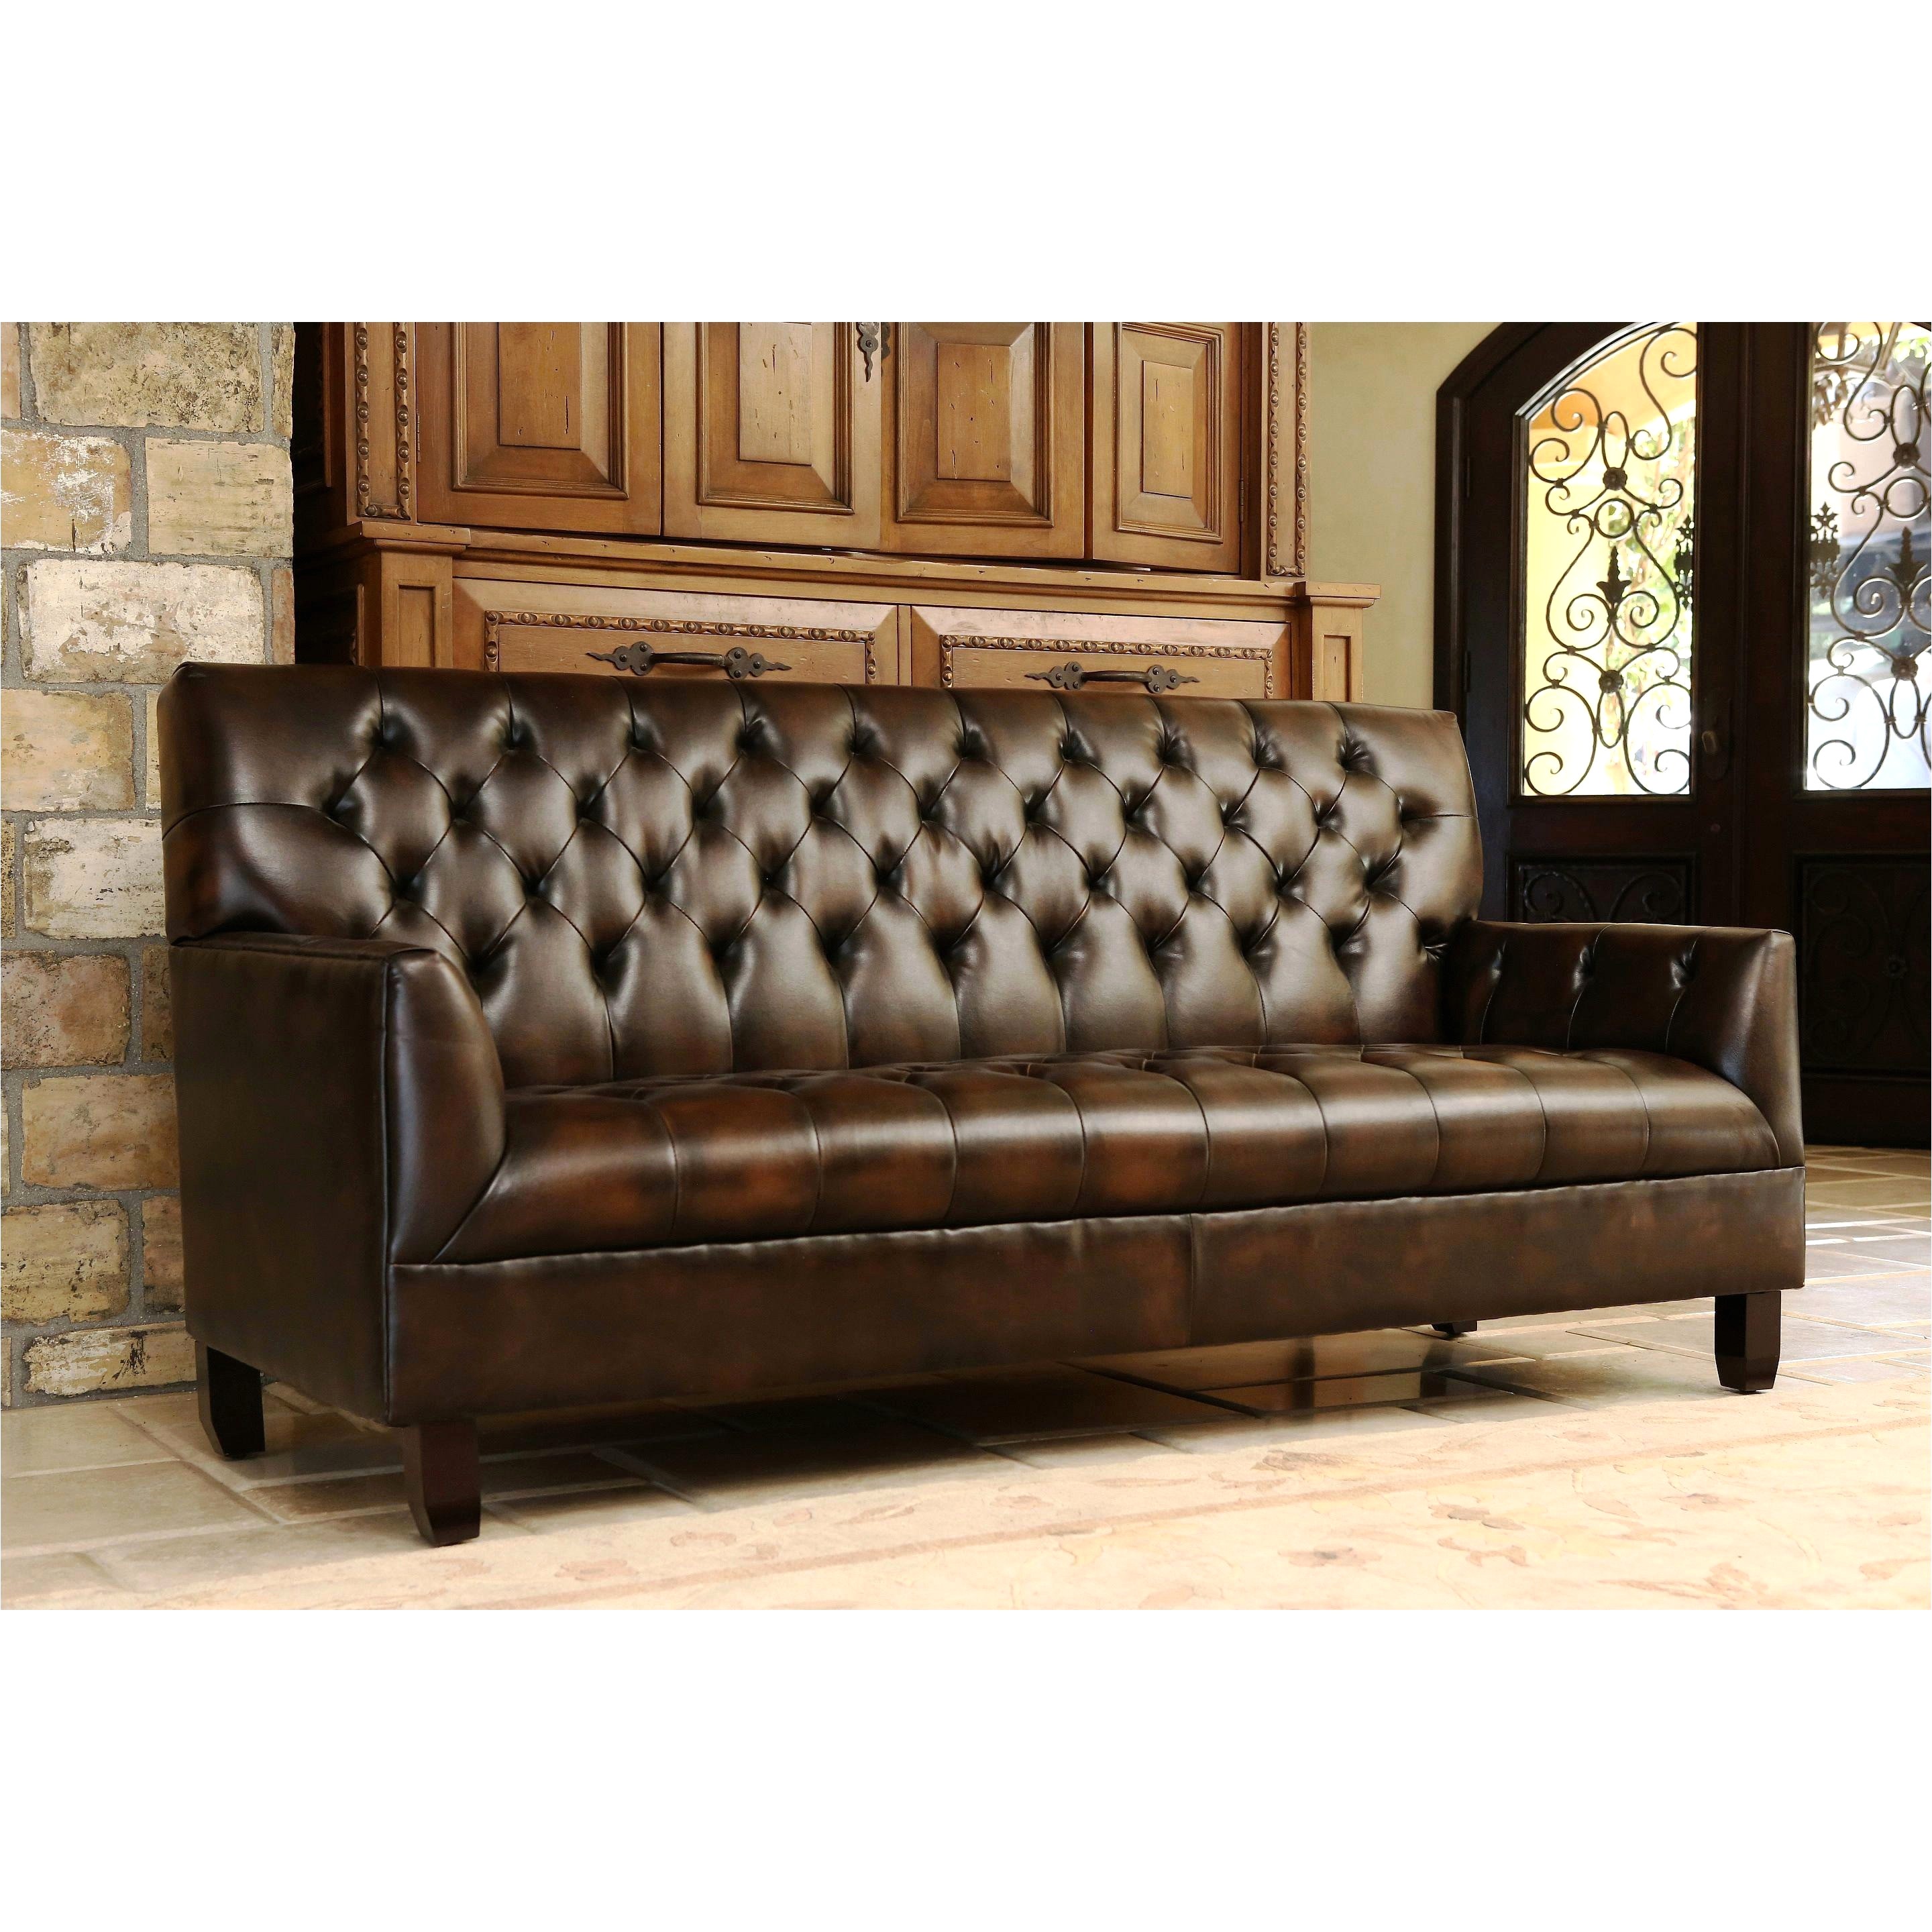 restoration hardware leather sofa minimalist furniture leather loveseats elegant navy loveseat 0d tags as to